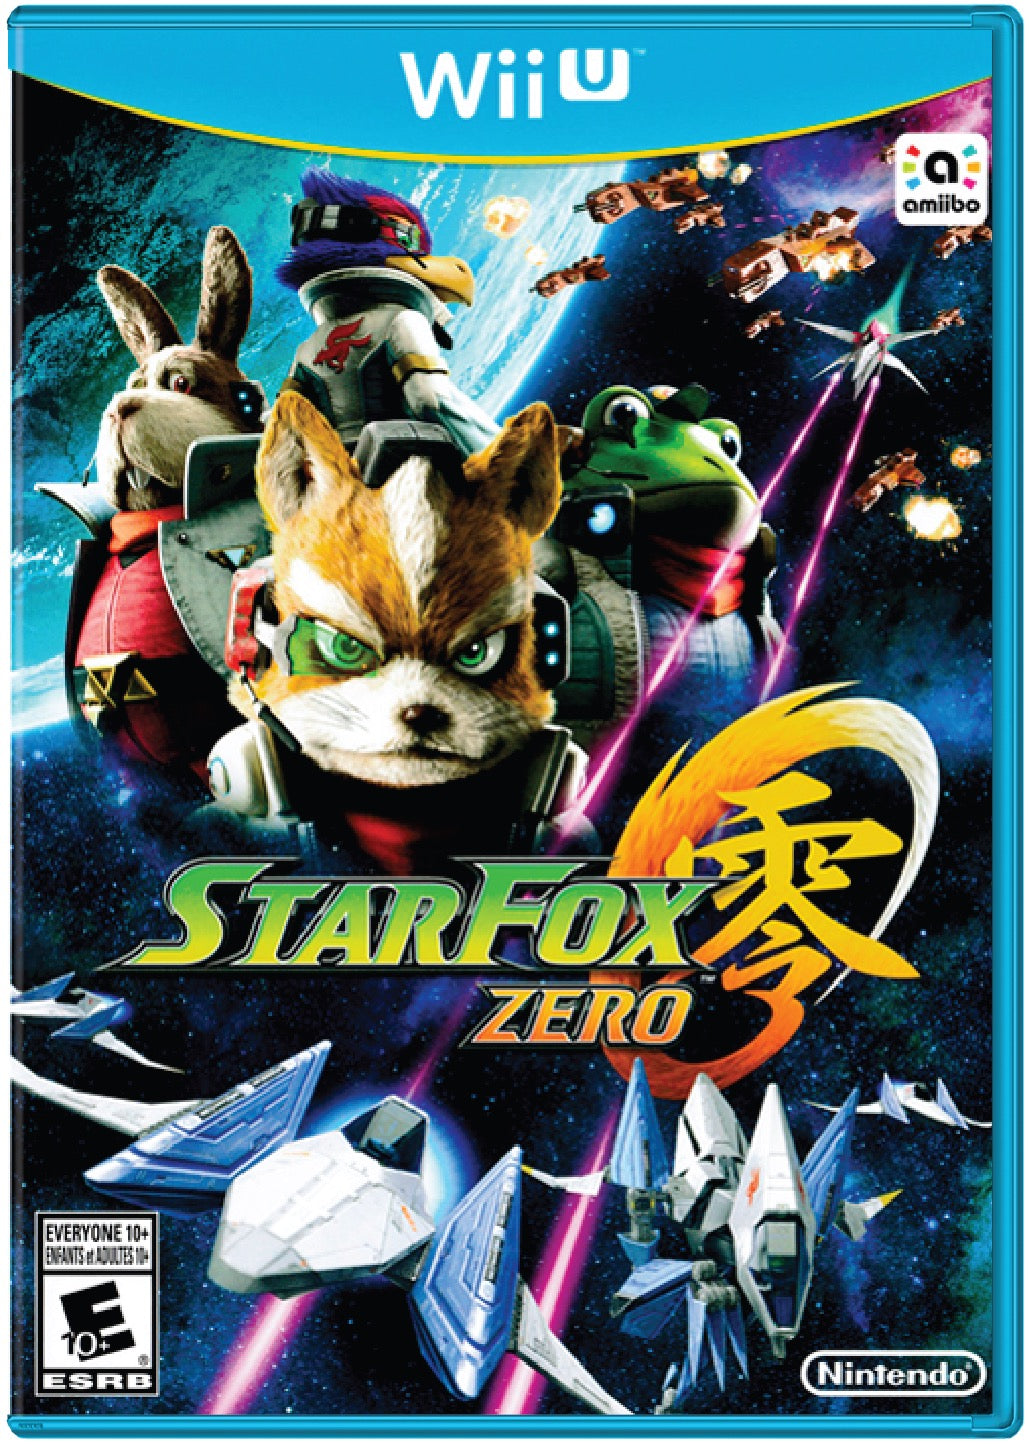 Star Fox Zero Cover Art and Product Photo